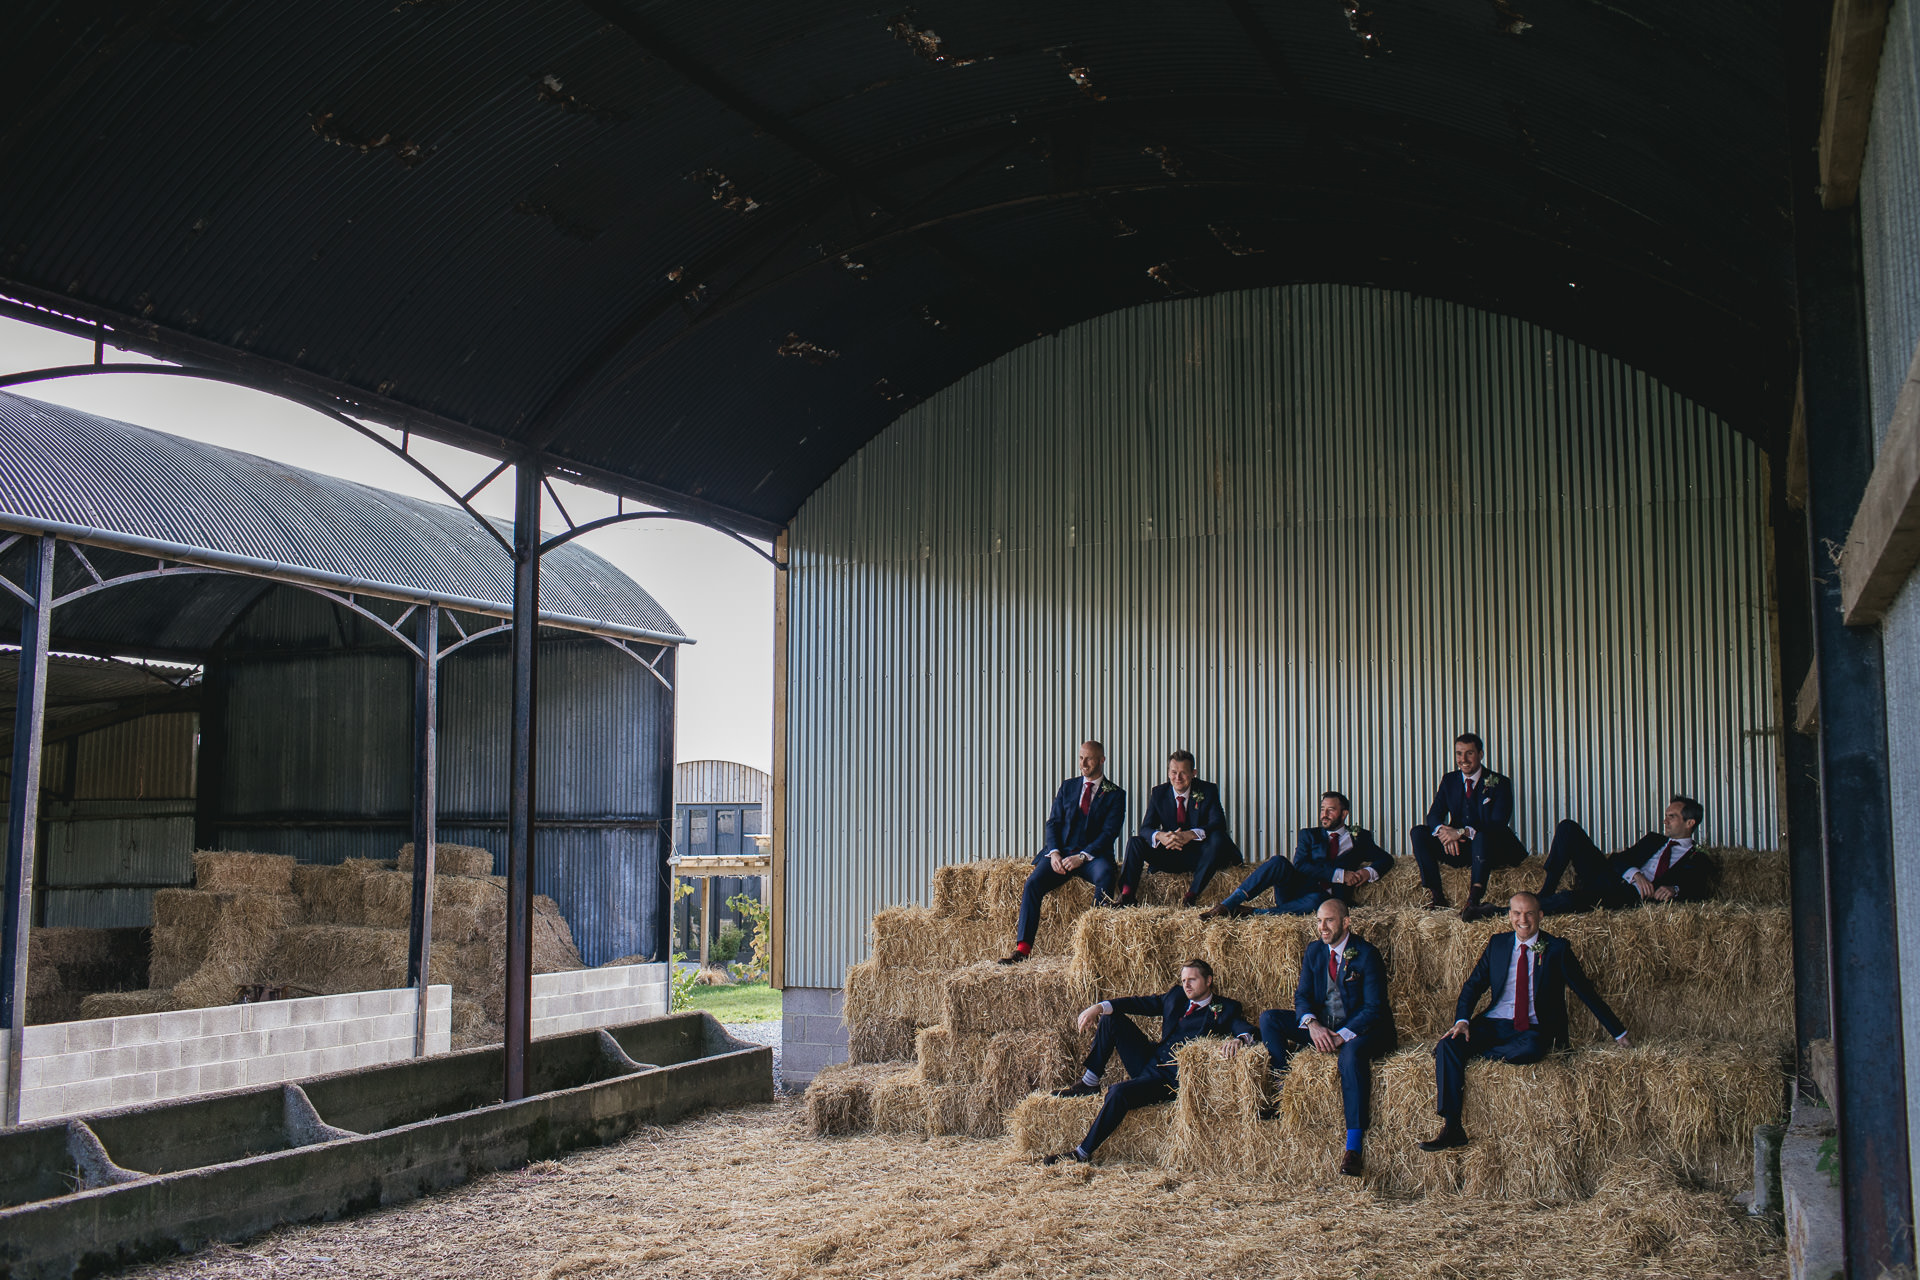 Groom and groomsmen on hay bales in a barn